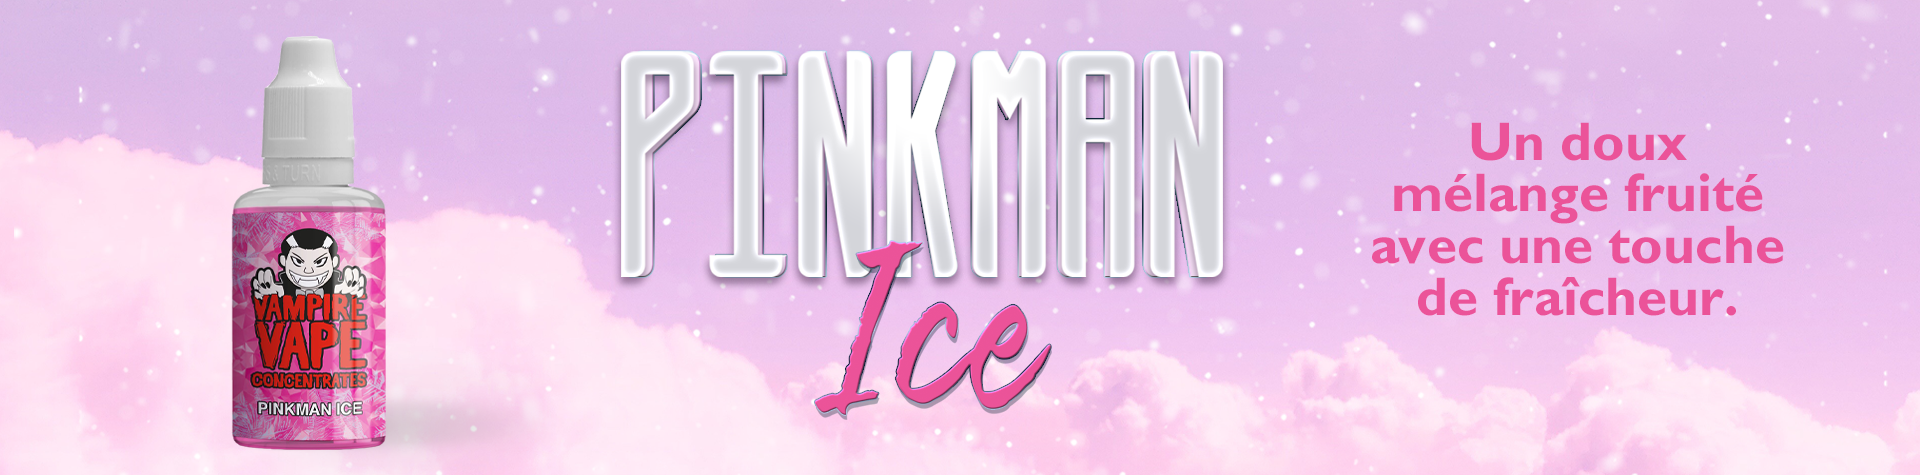 Pinkman Ice